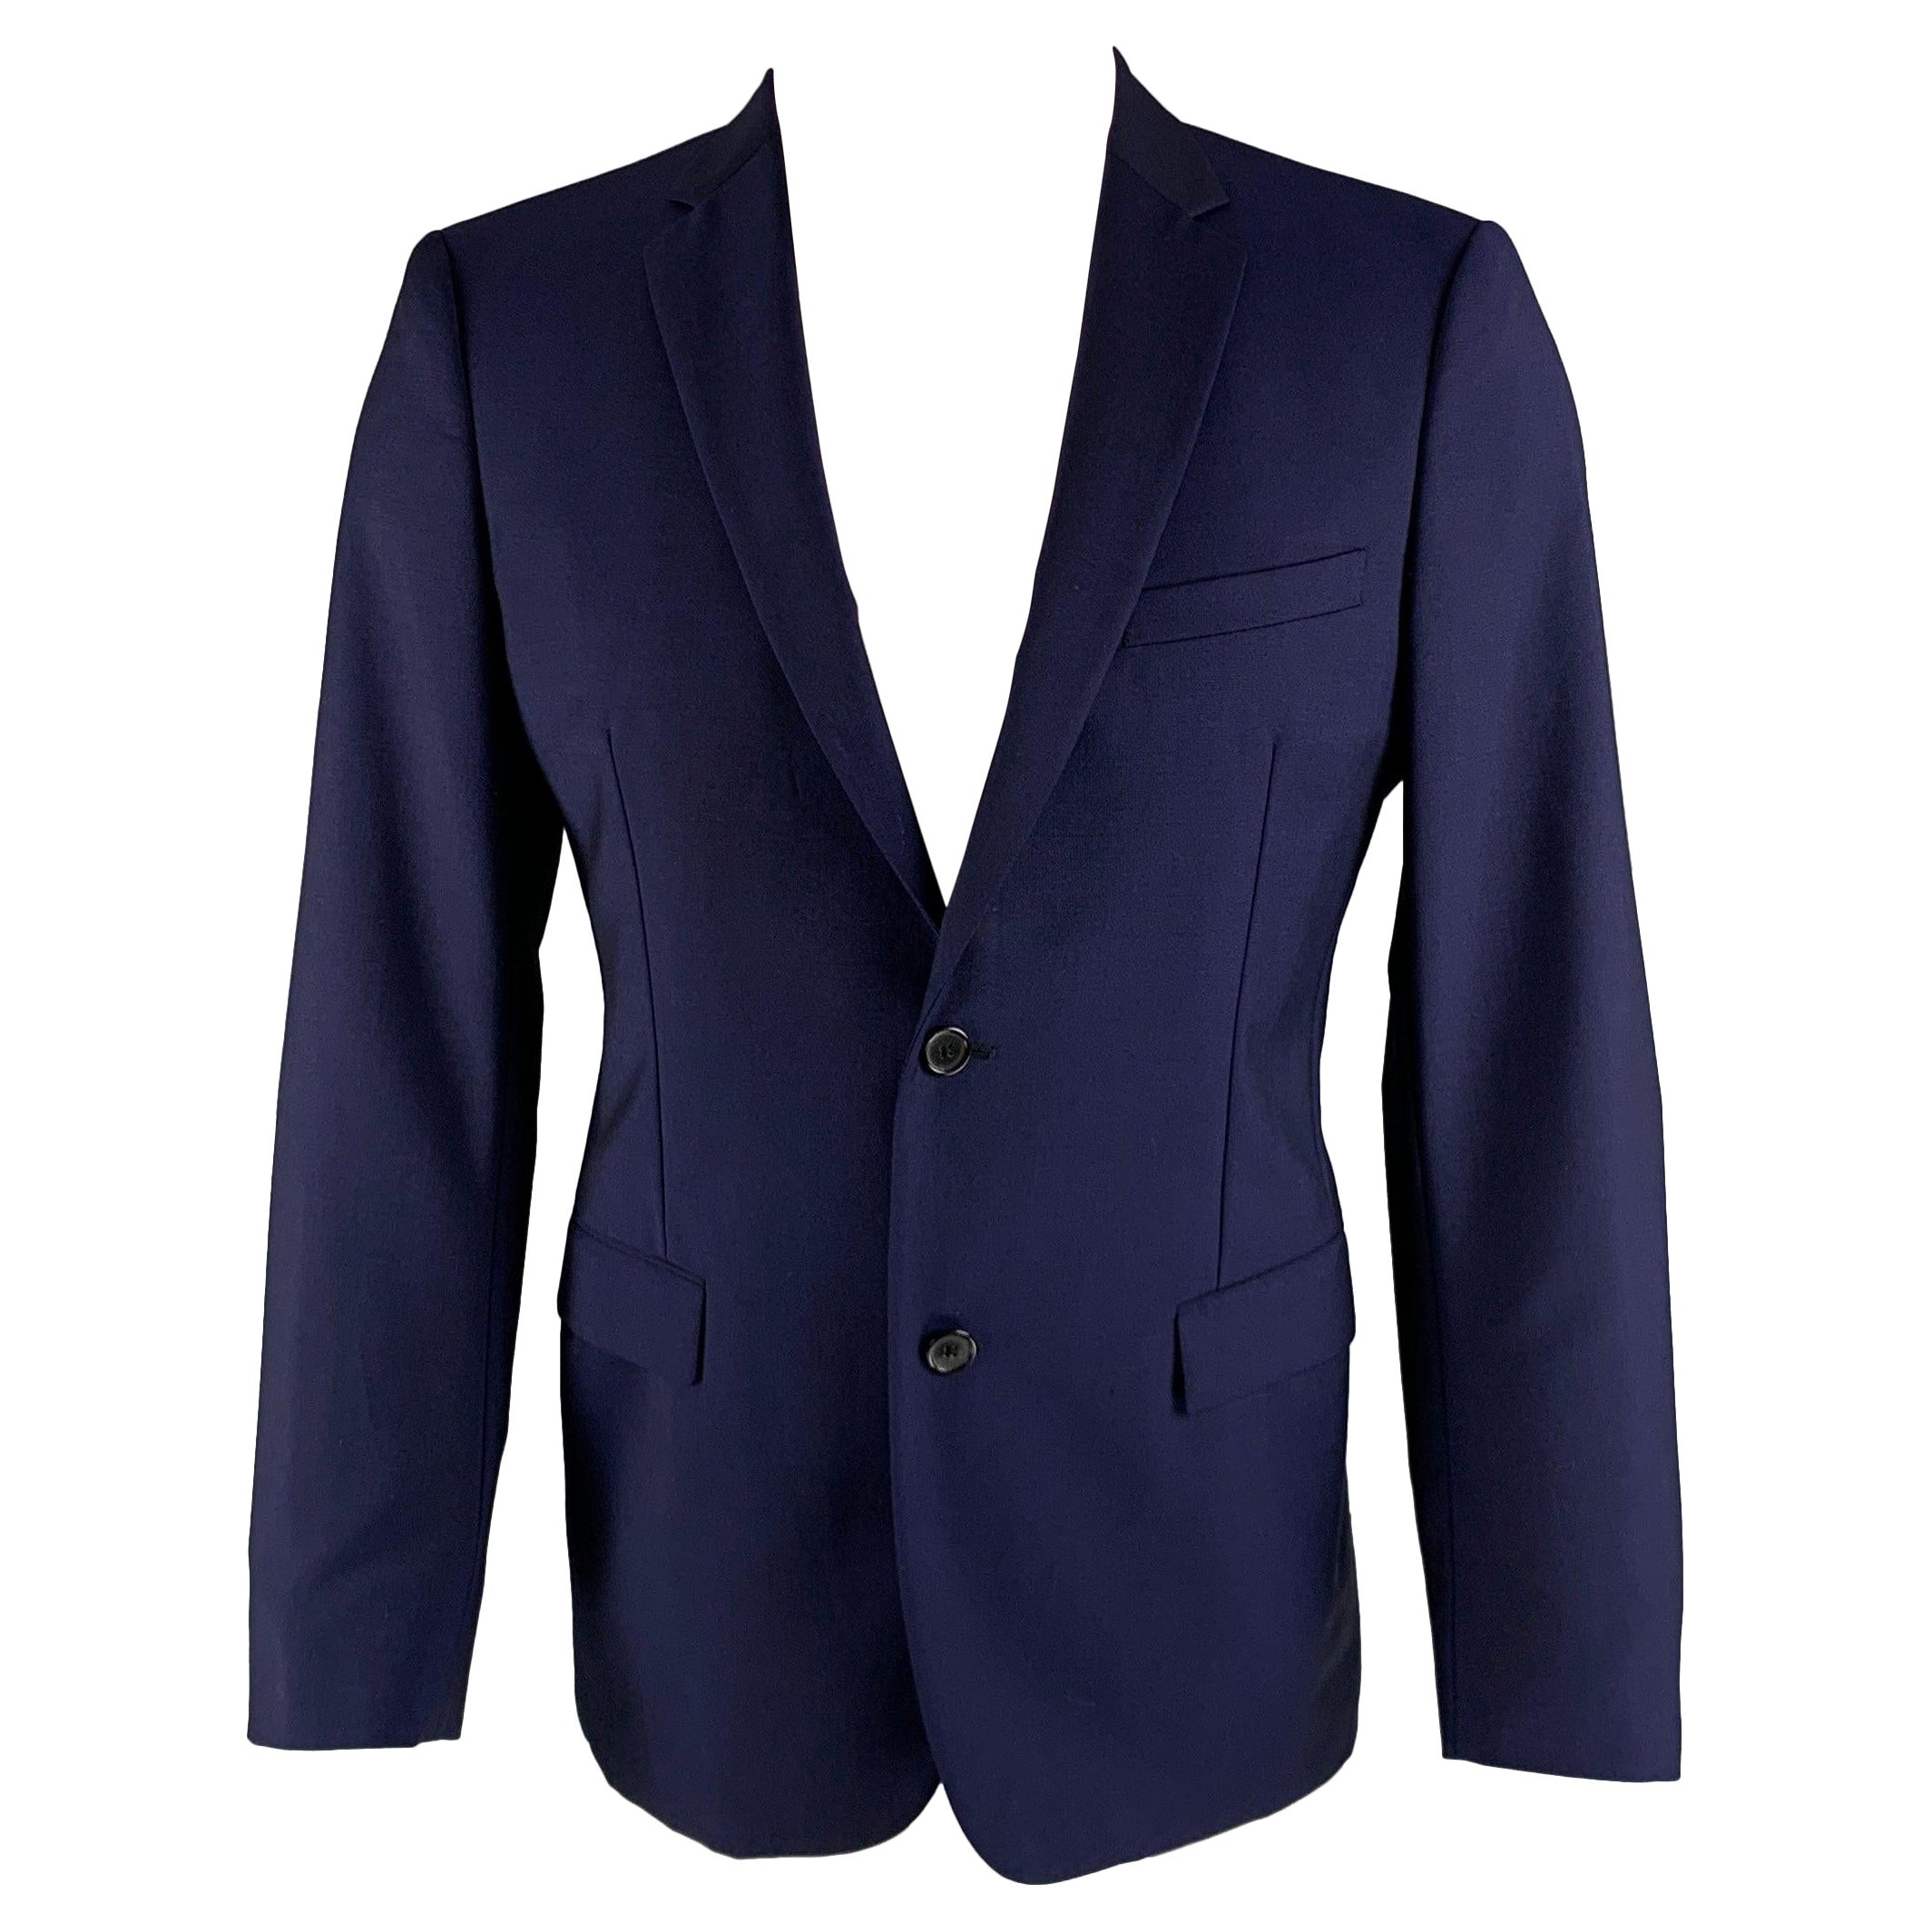 JIL SANDER Size 38 Royal Blue Solid Wool Mohair Notch Lapel Sport Coat For Sale